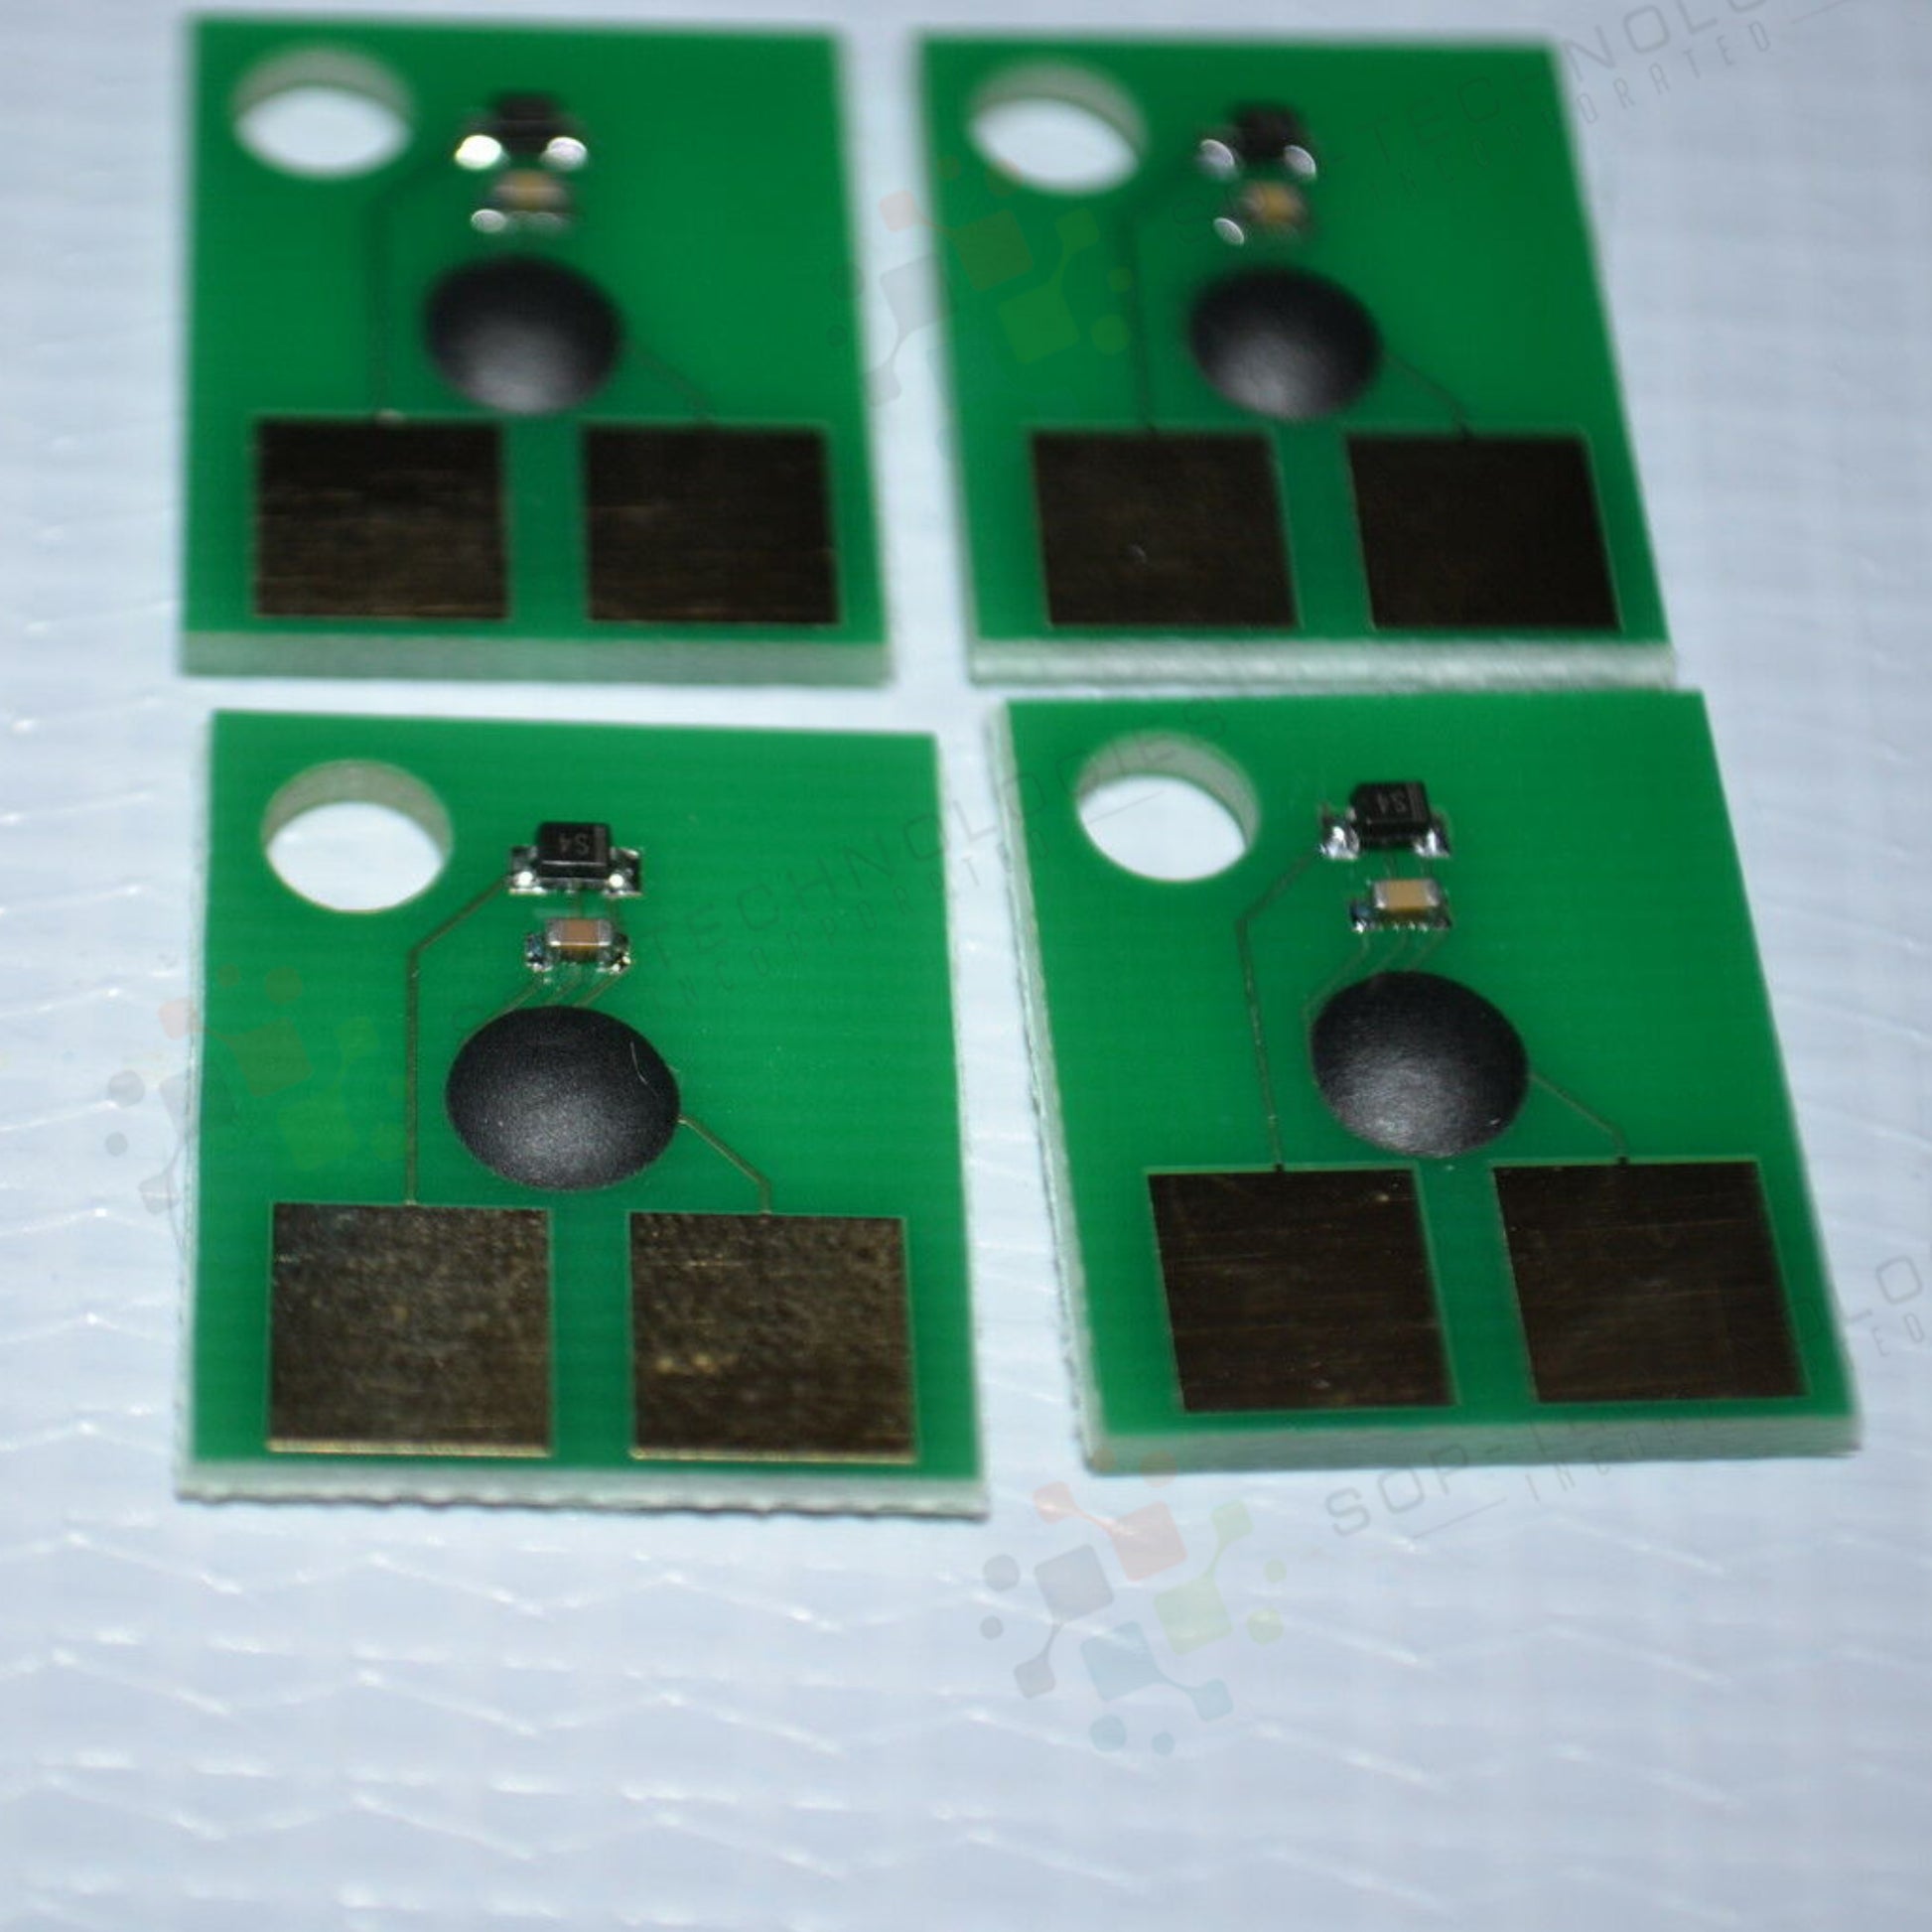 4 Toner Chip for Lexmark E230 E232 E232t E234 E240 E240n E240t E332 E340 - SOP-TECHNOLOGIES, INC.